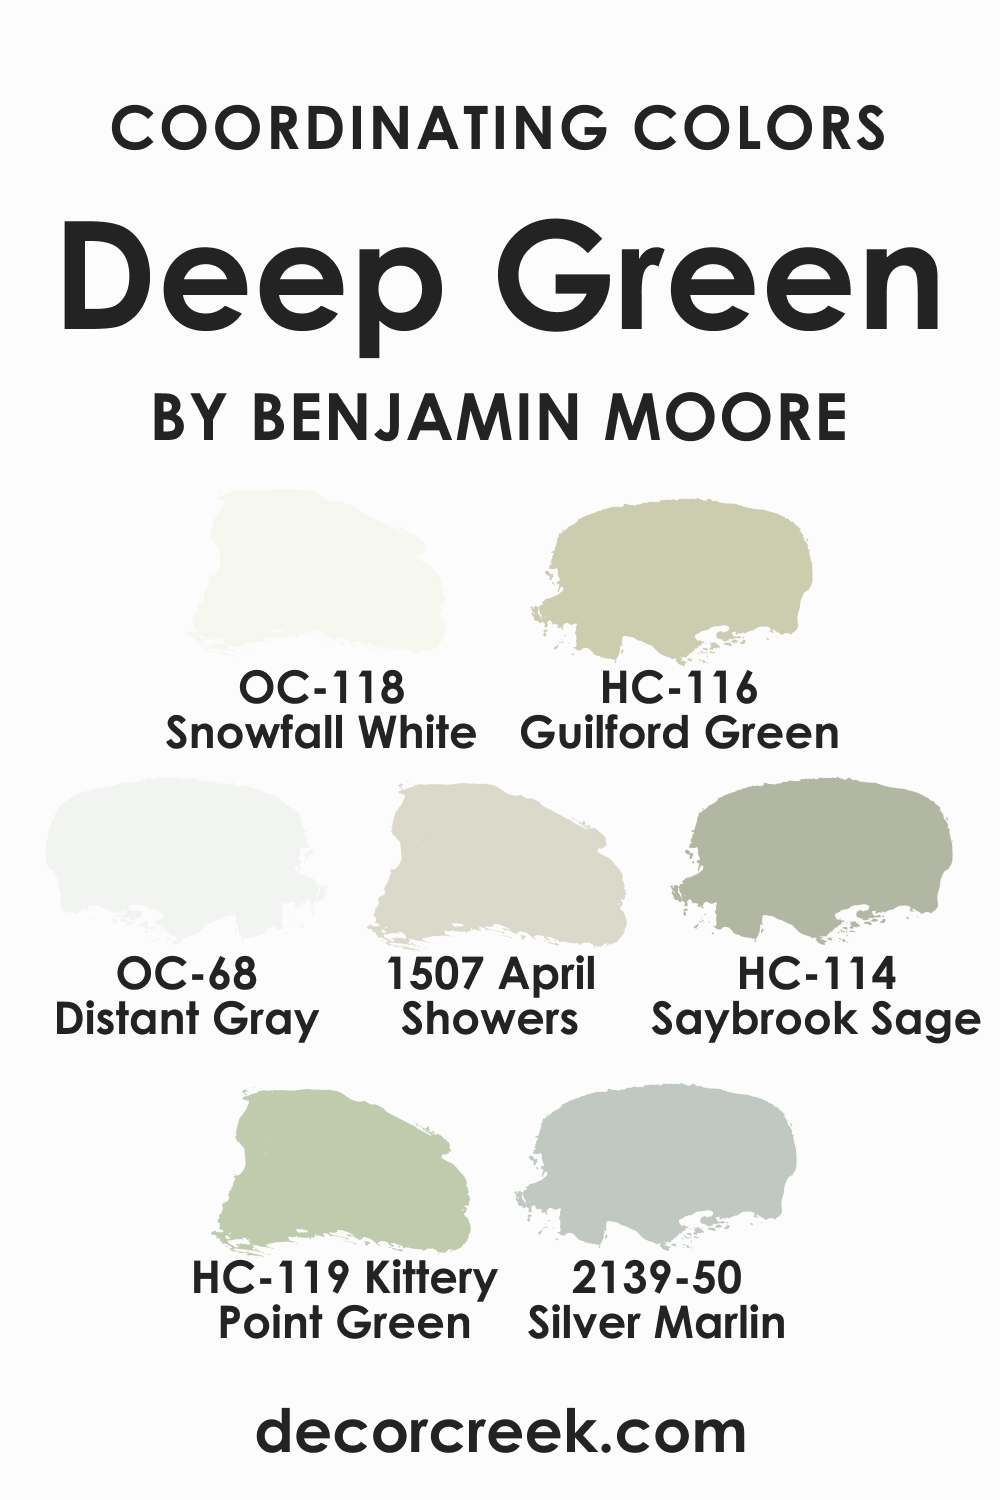 Coordinating Colors of Deep Green 2039-10